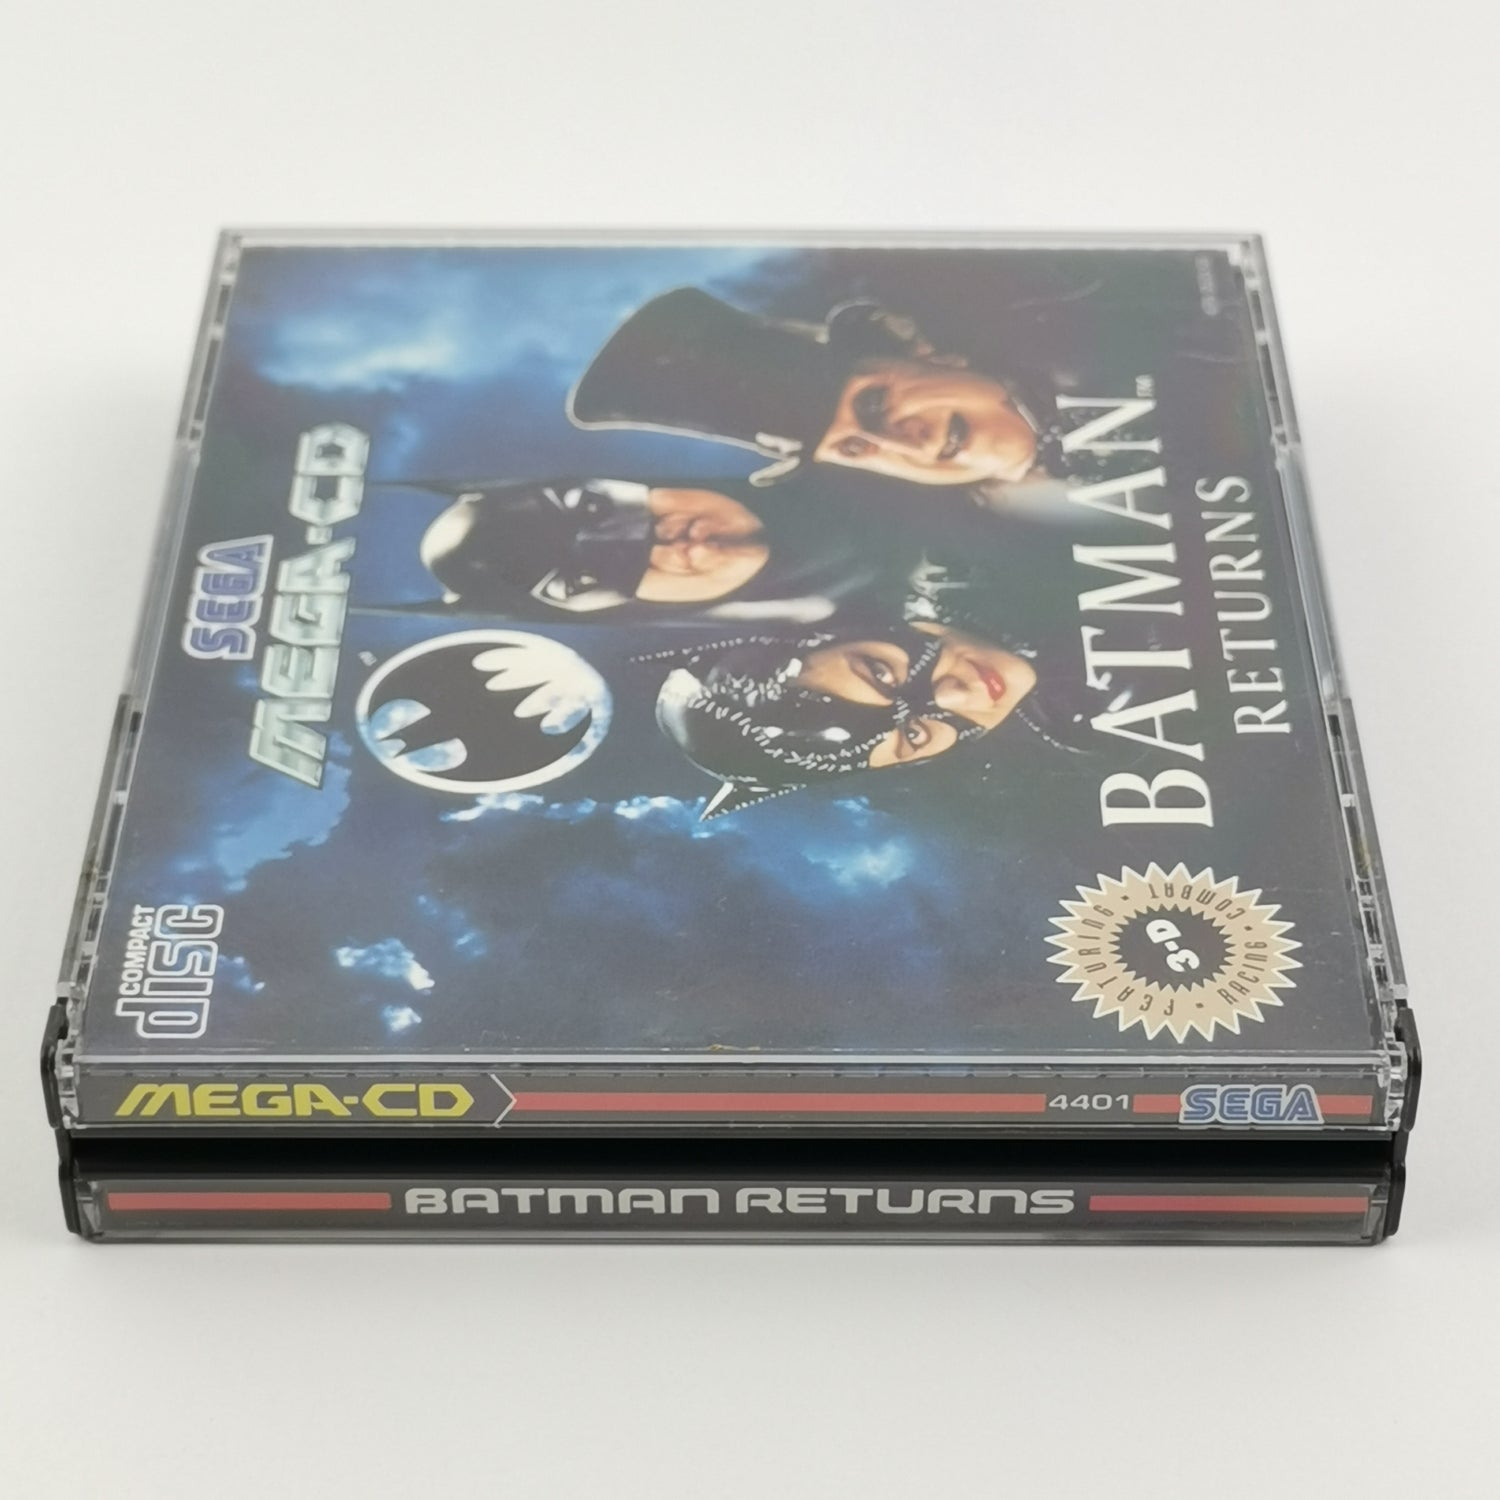 Sega Mega CD Game: Batman Returns - Original Packaging Instructions | PAL MC Disc Compact